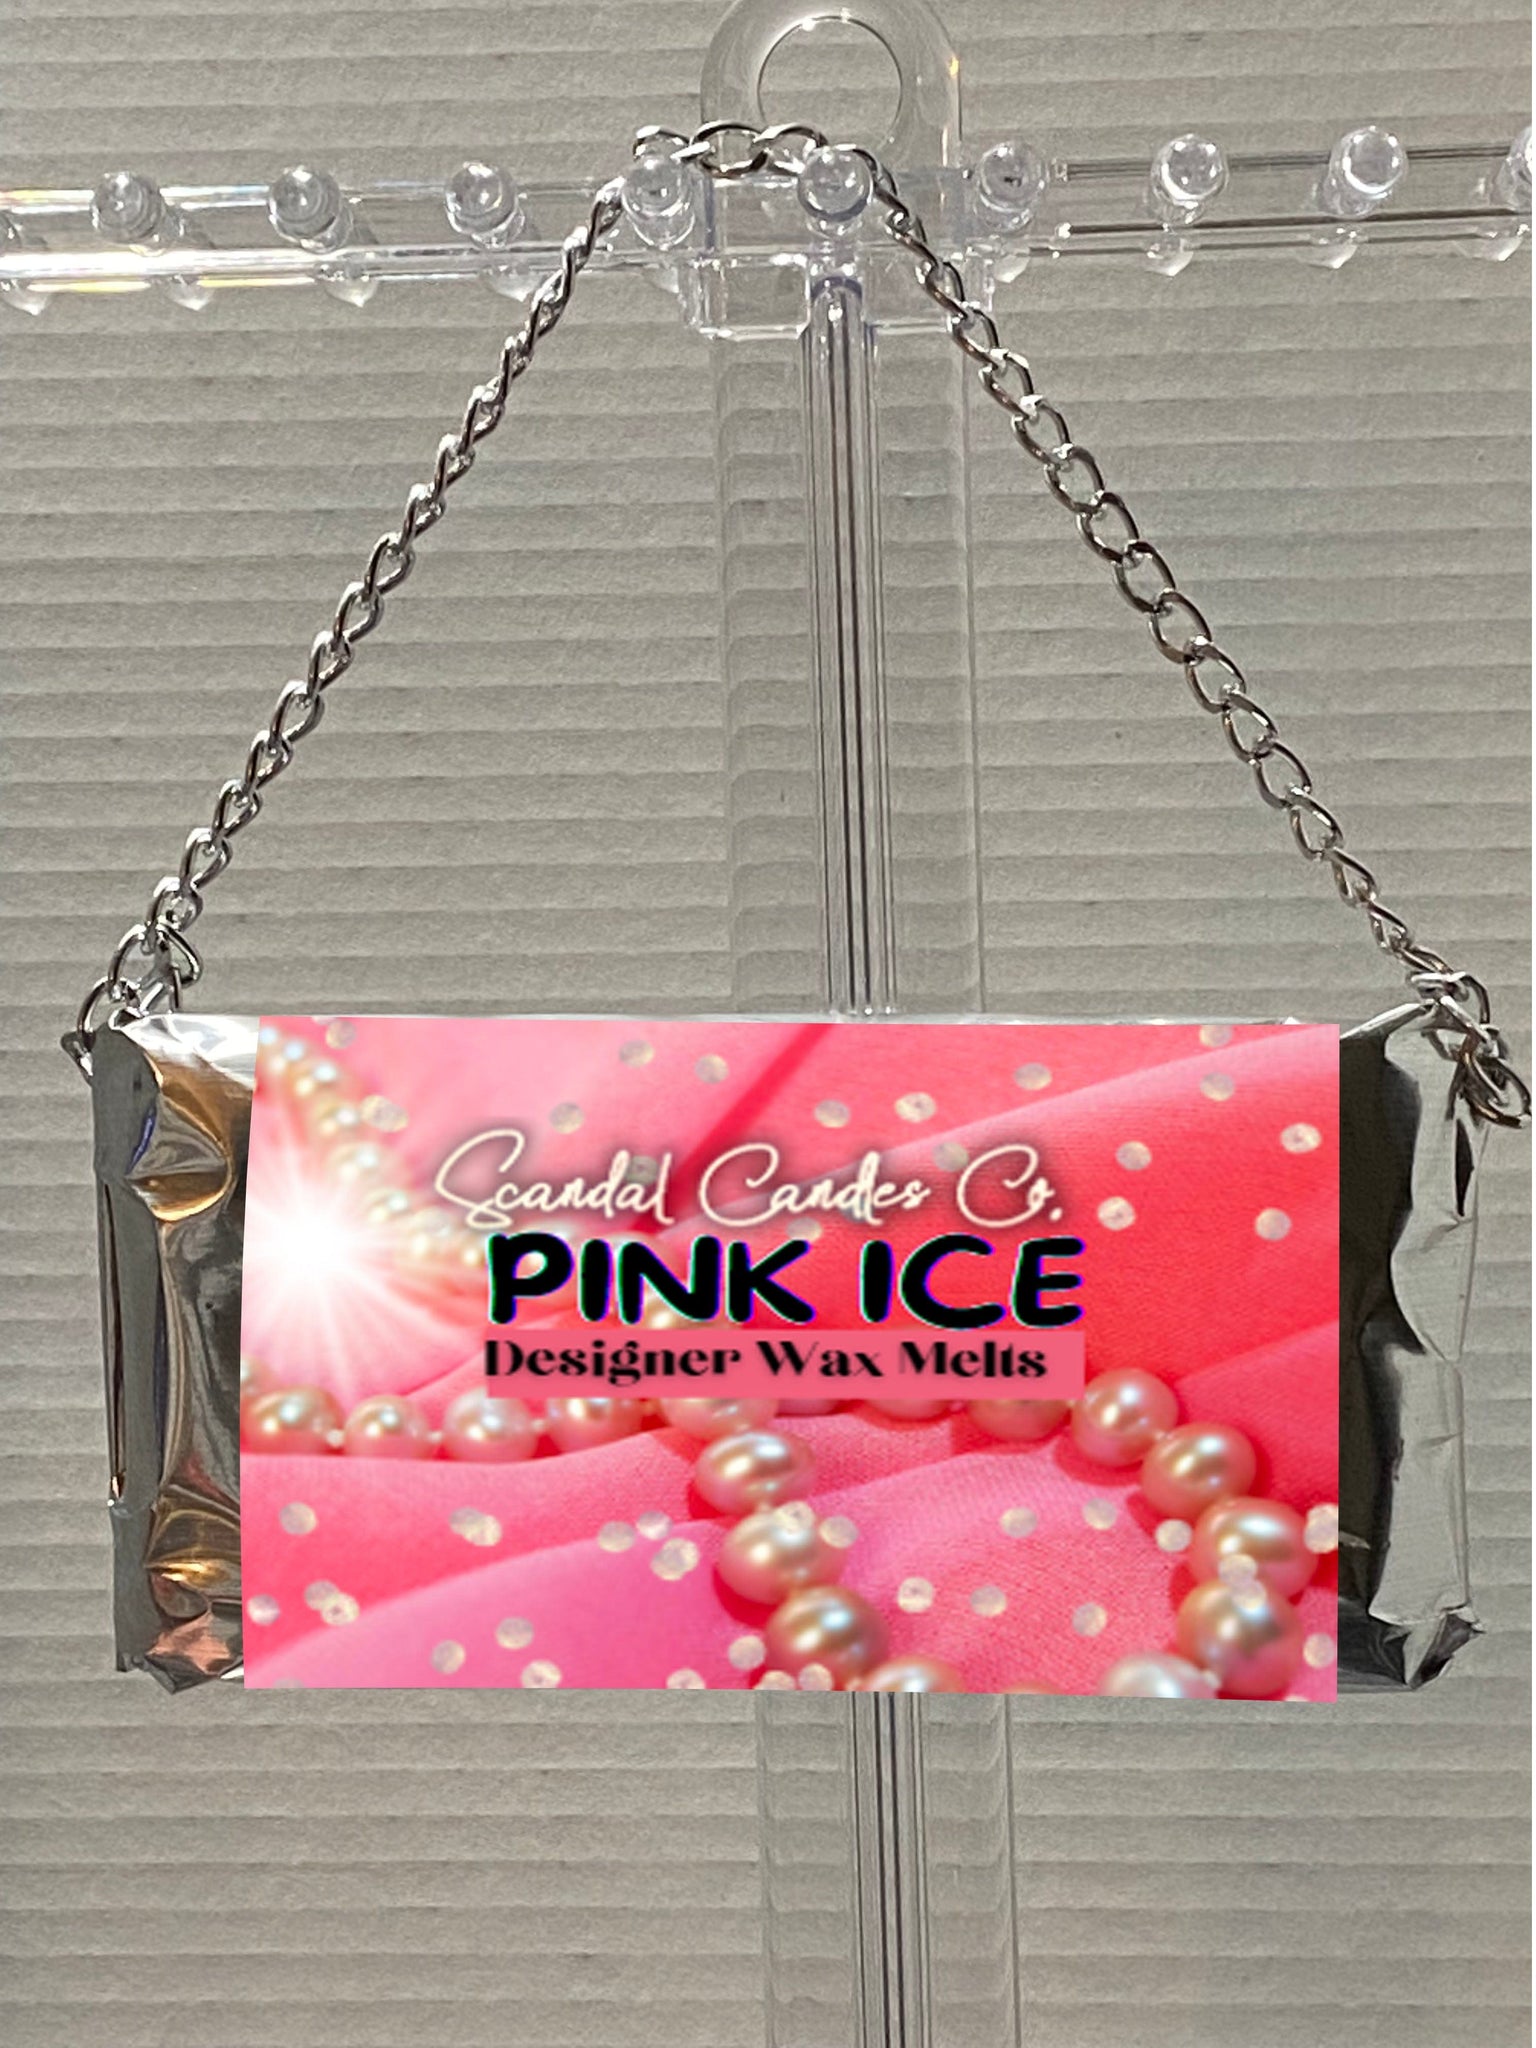 Designer Wax Melt Clutch/Purse - Pink Ice - Scandal Candles Co.